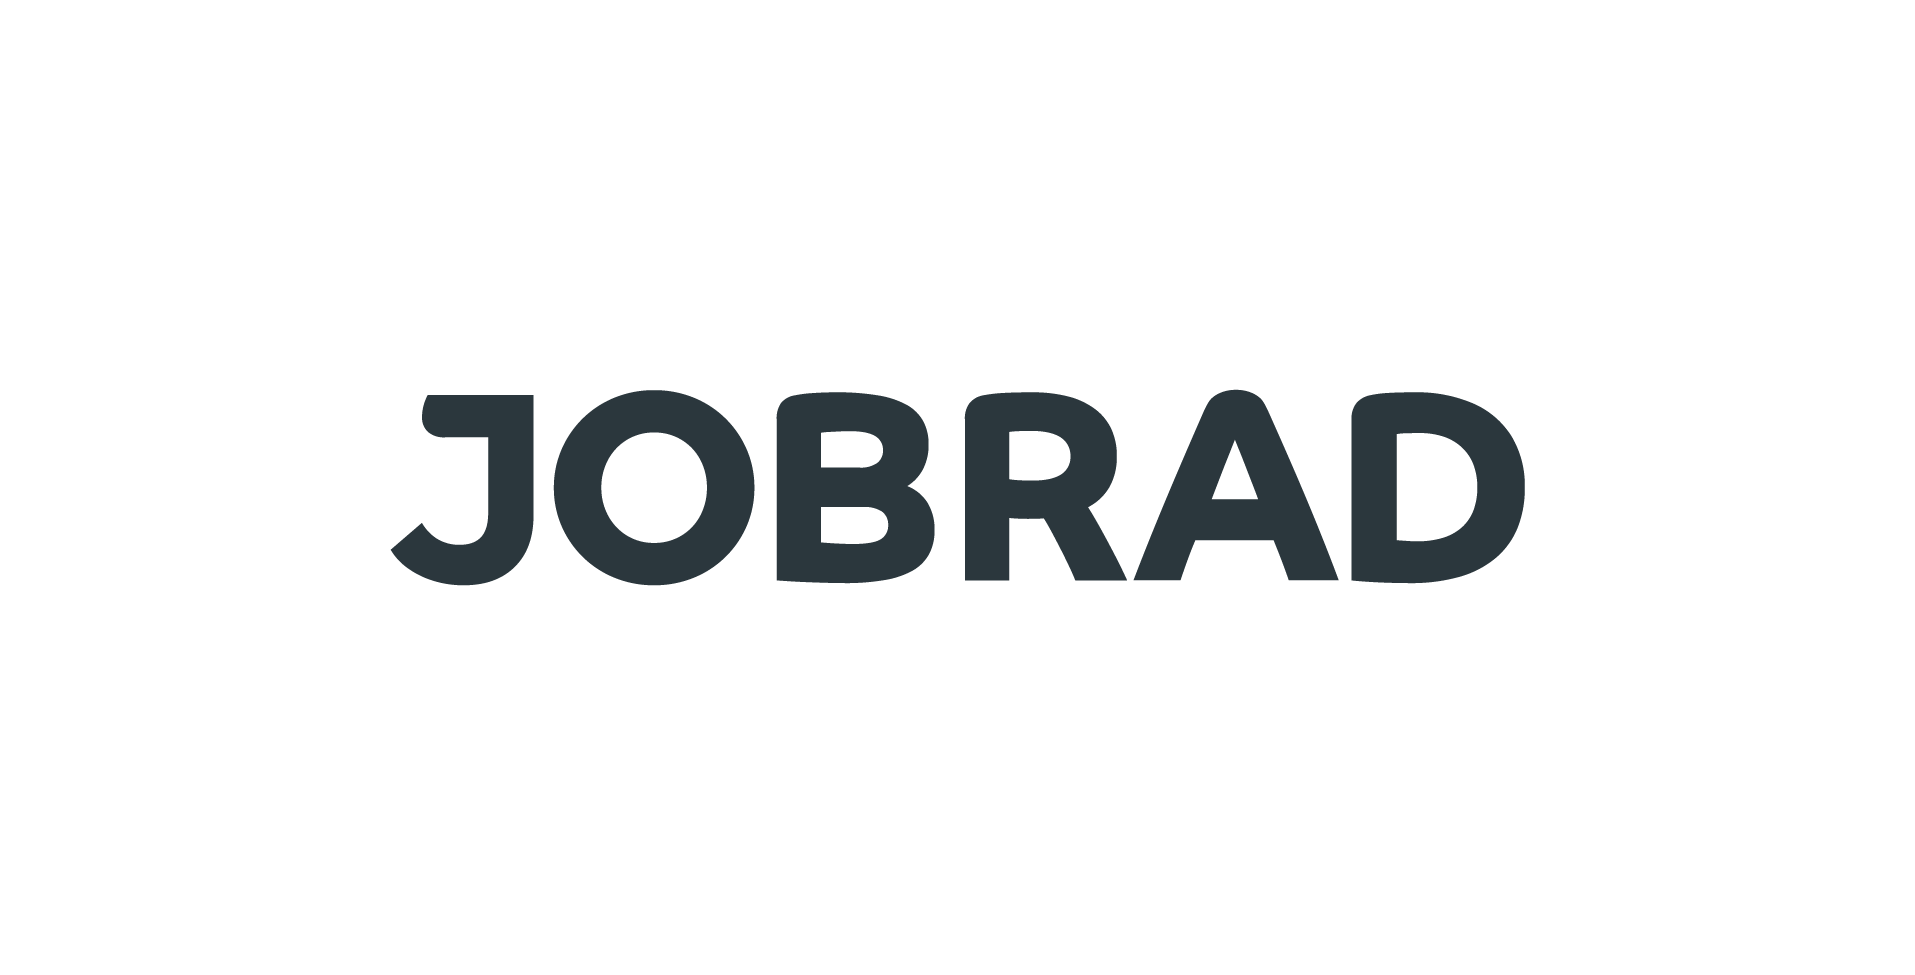 Logo Jobrad